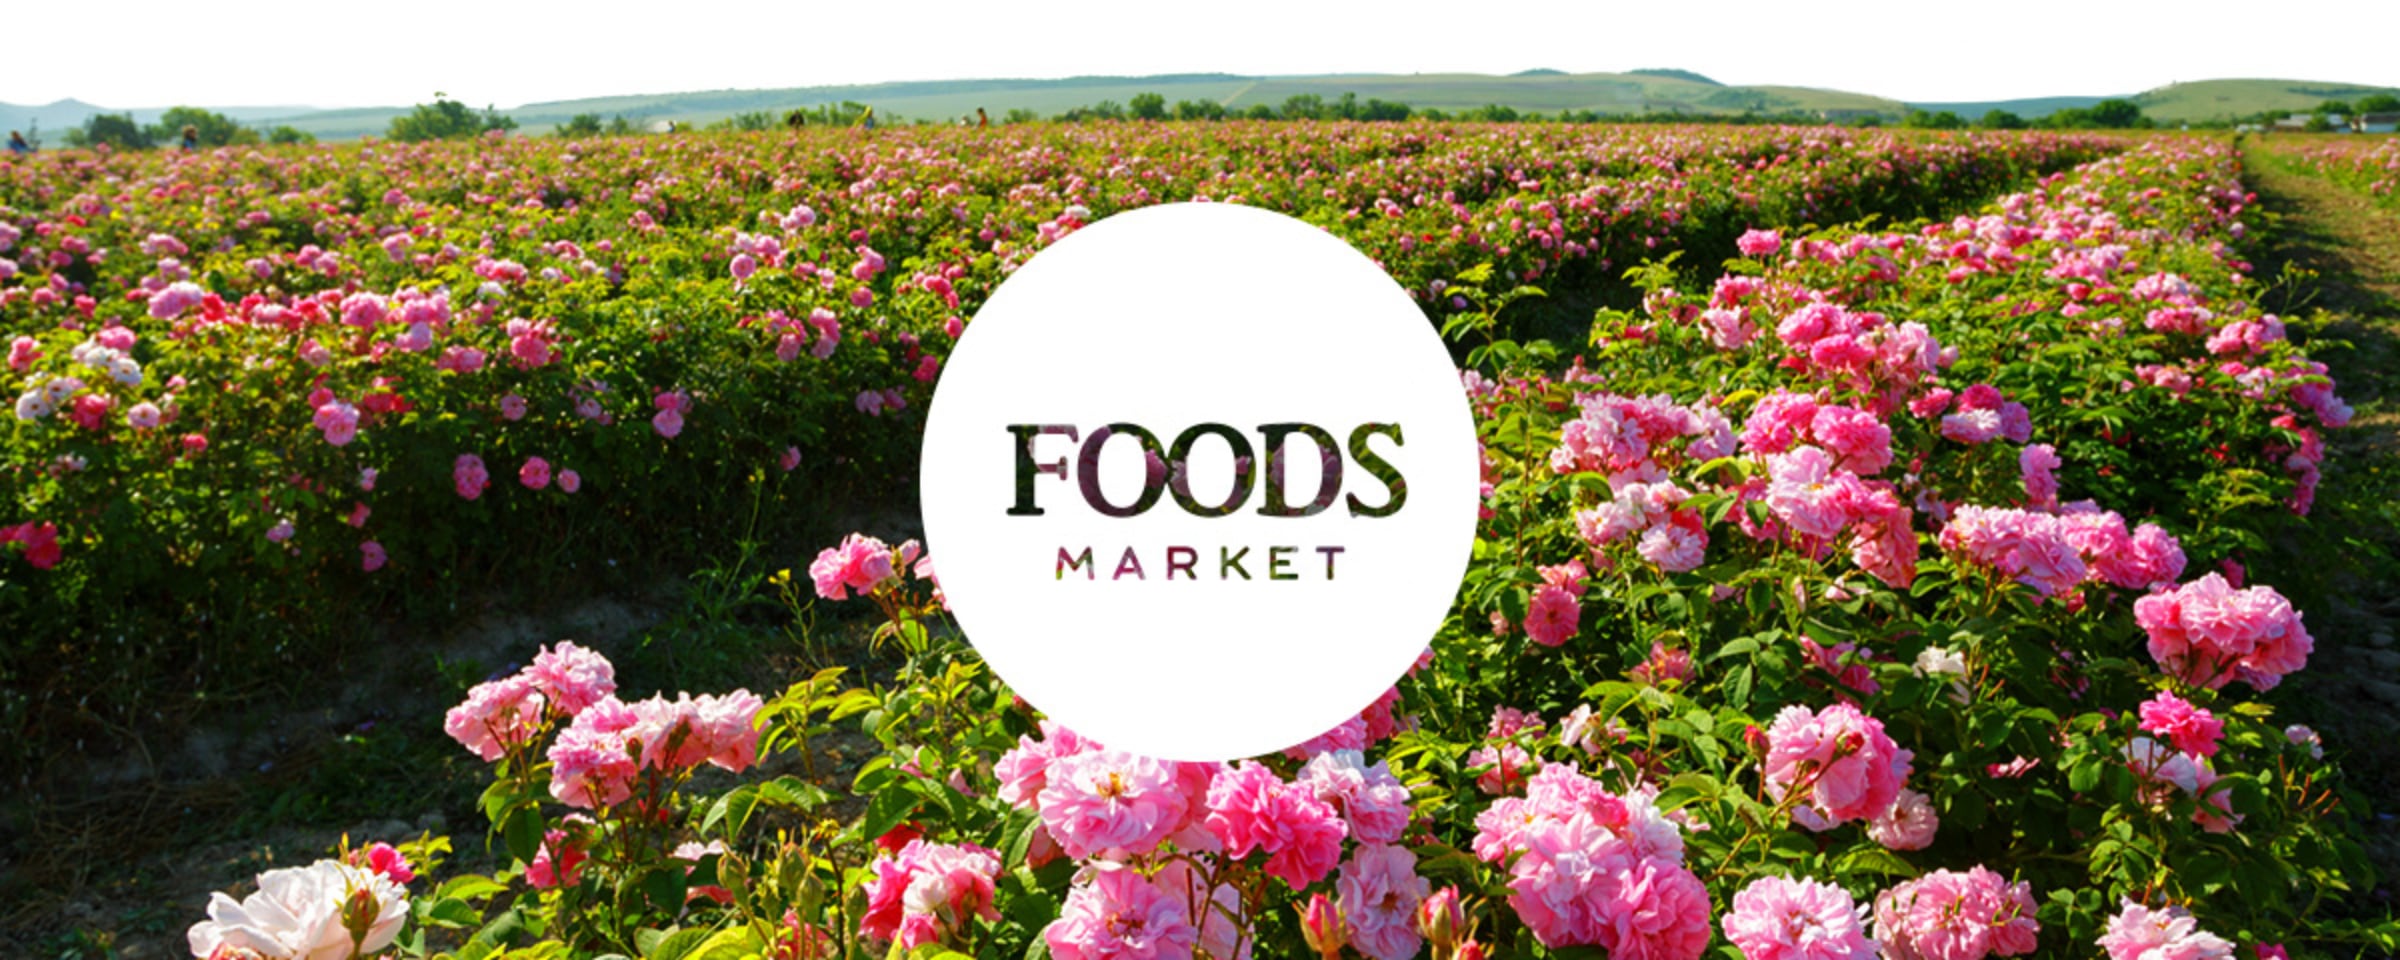 foods market logo